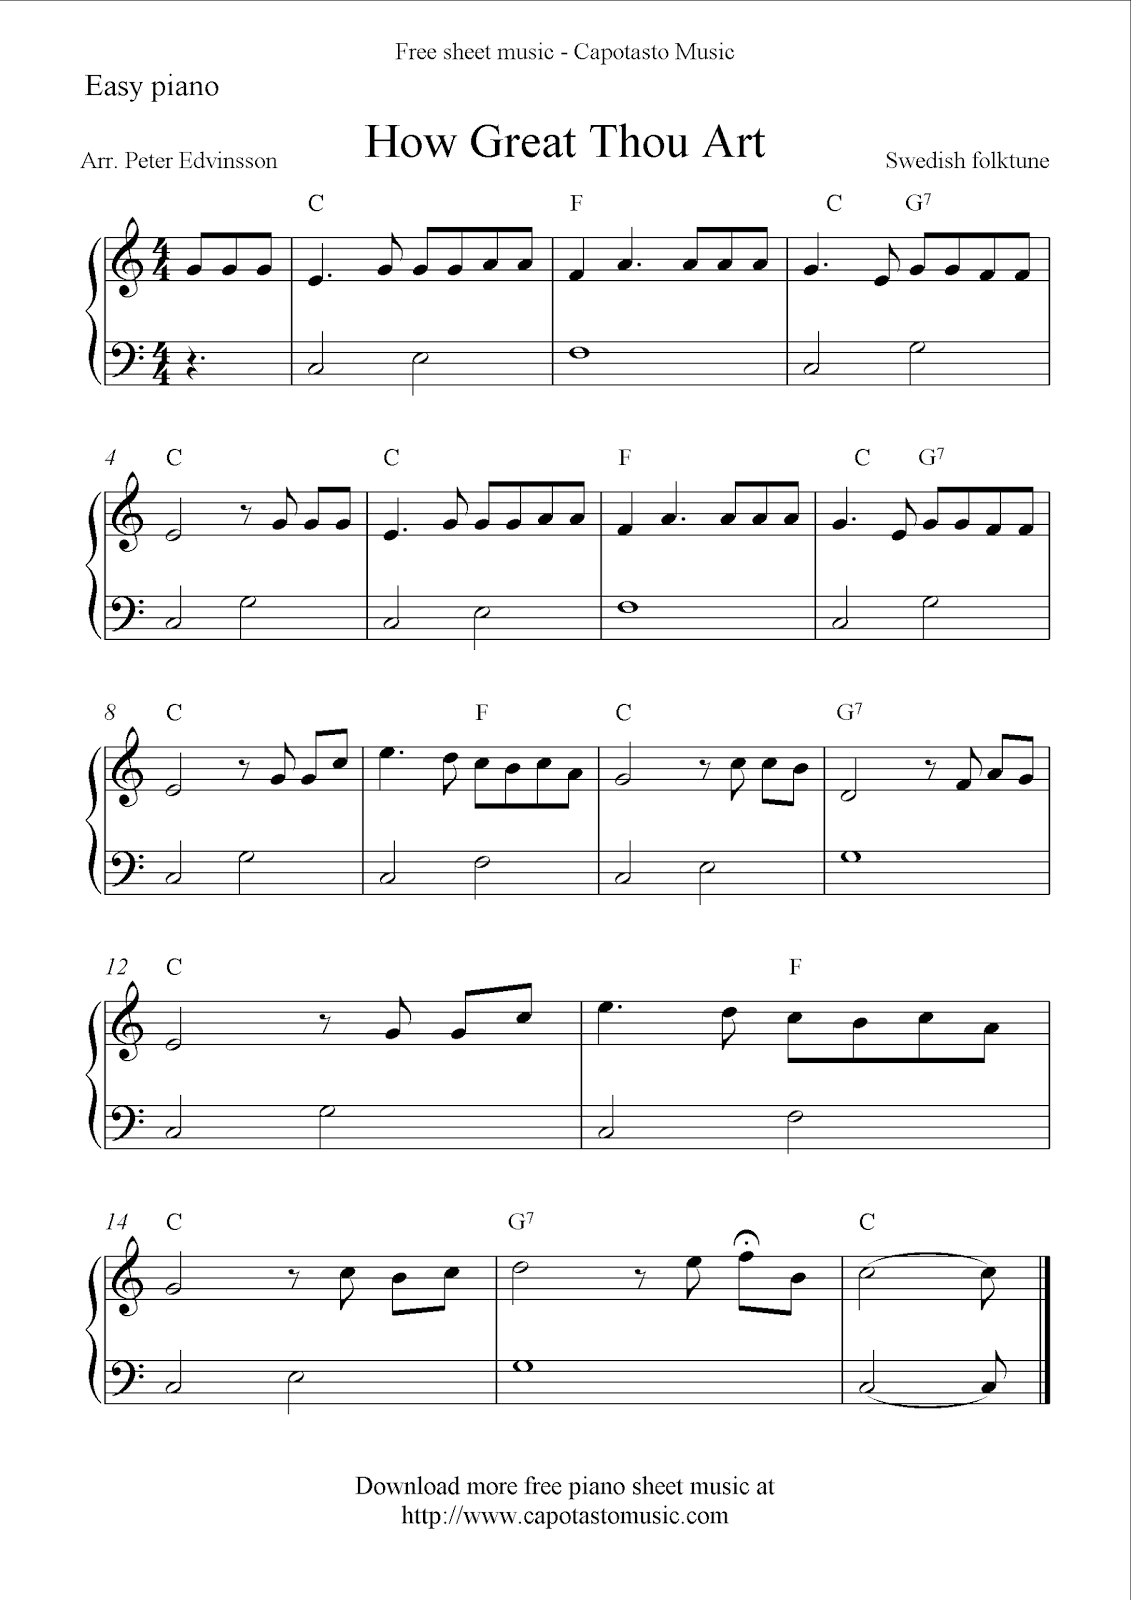 Free Easy Piano Sheet Music, How Great Thou Art - Free Printable Sheet Music